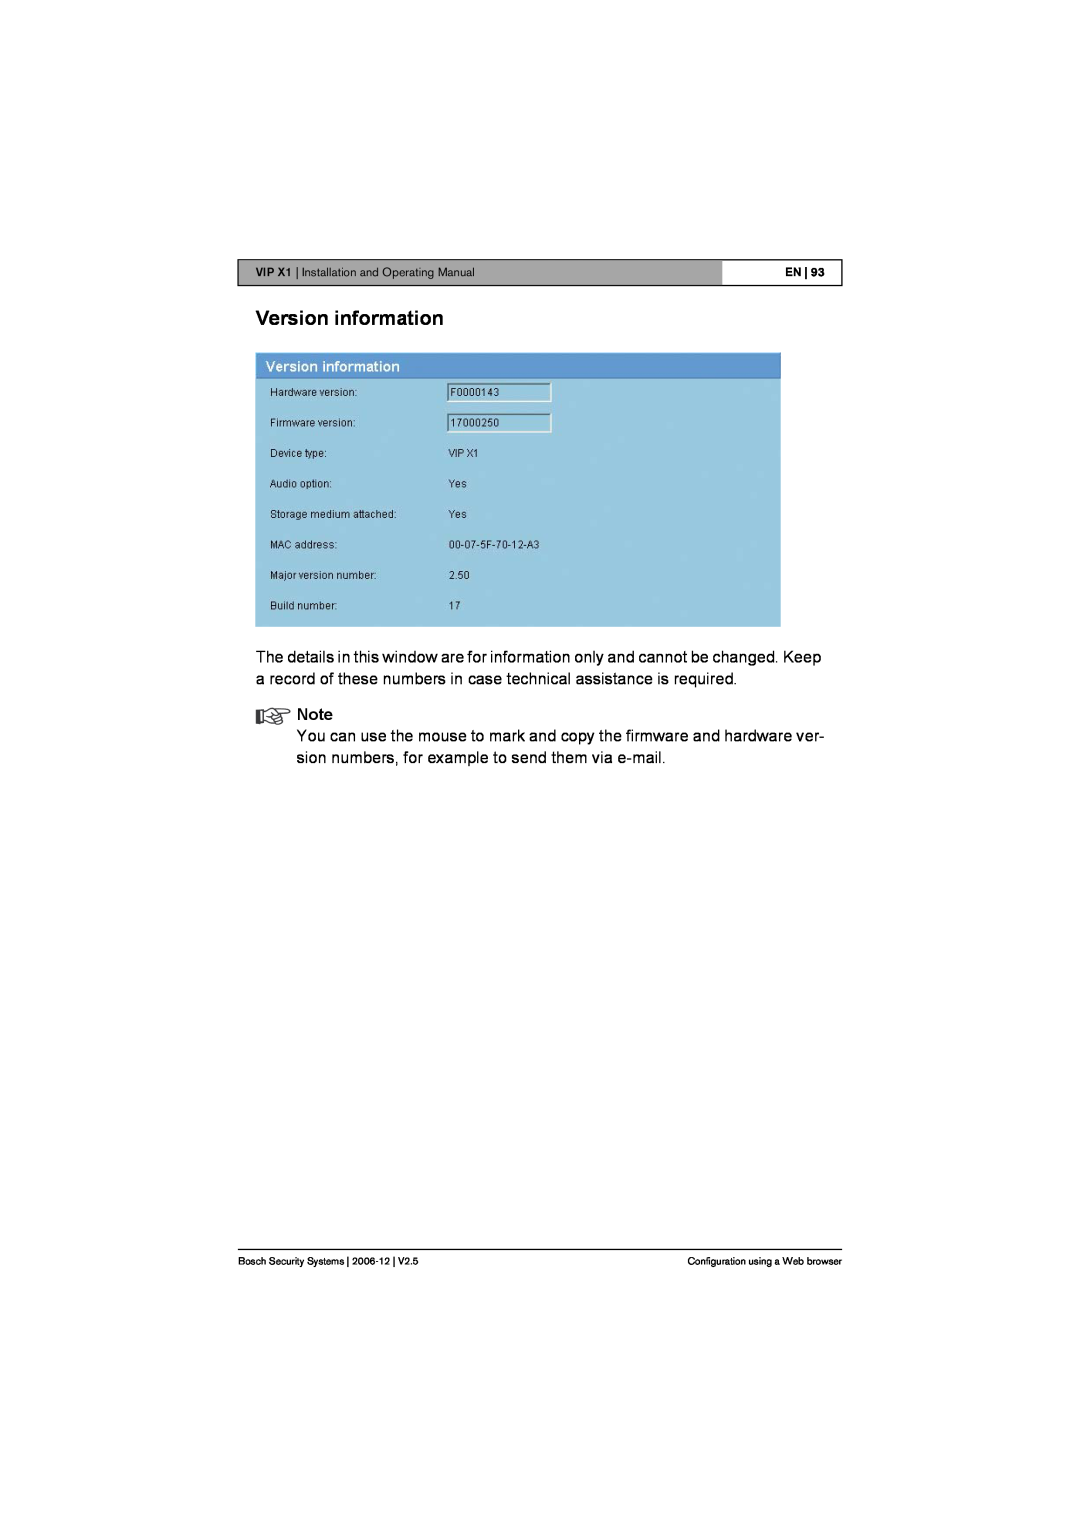 Bosch Appliances VIP X1 manual Version information 